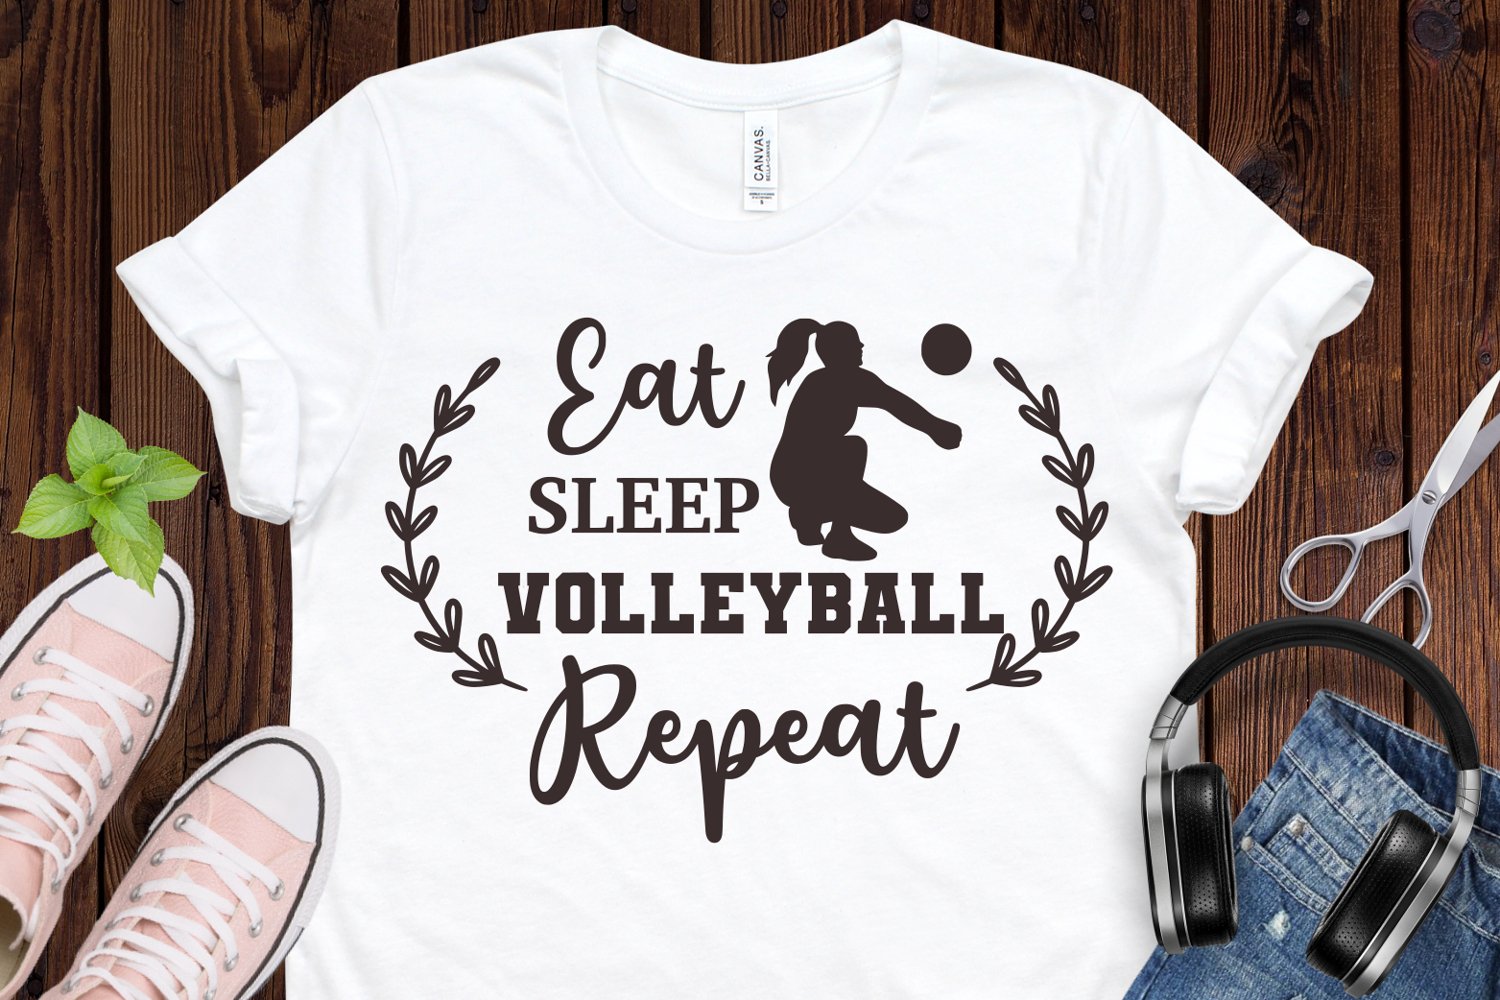 Eat, sleep, volleyball, repeat - t-shirt design.